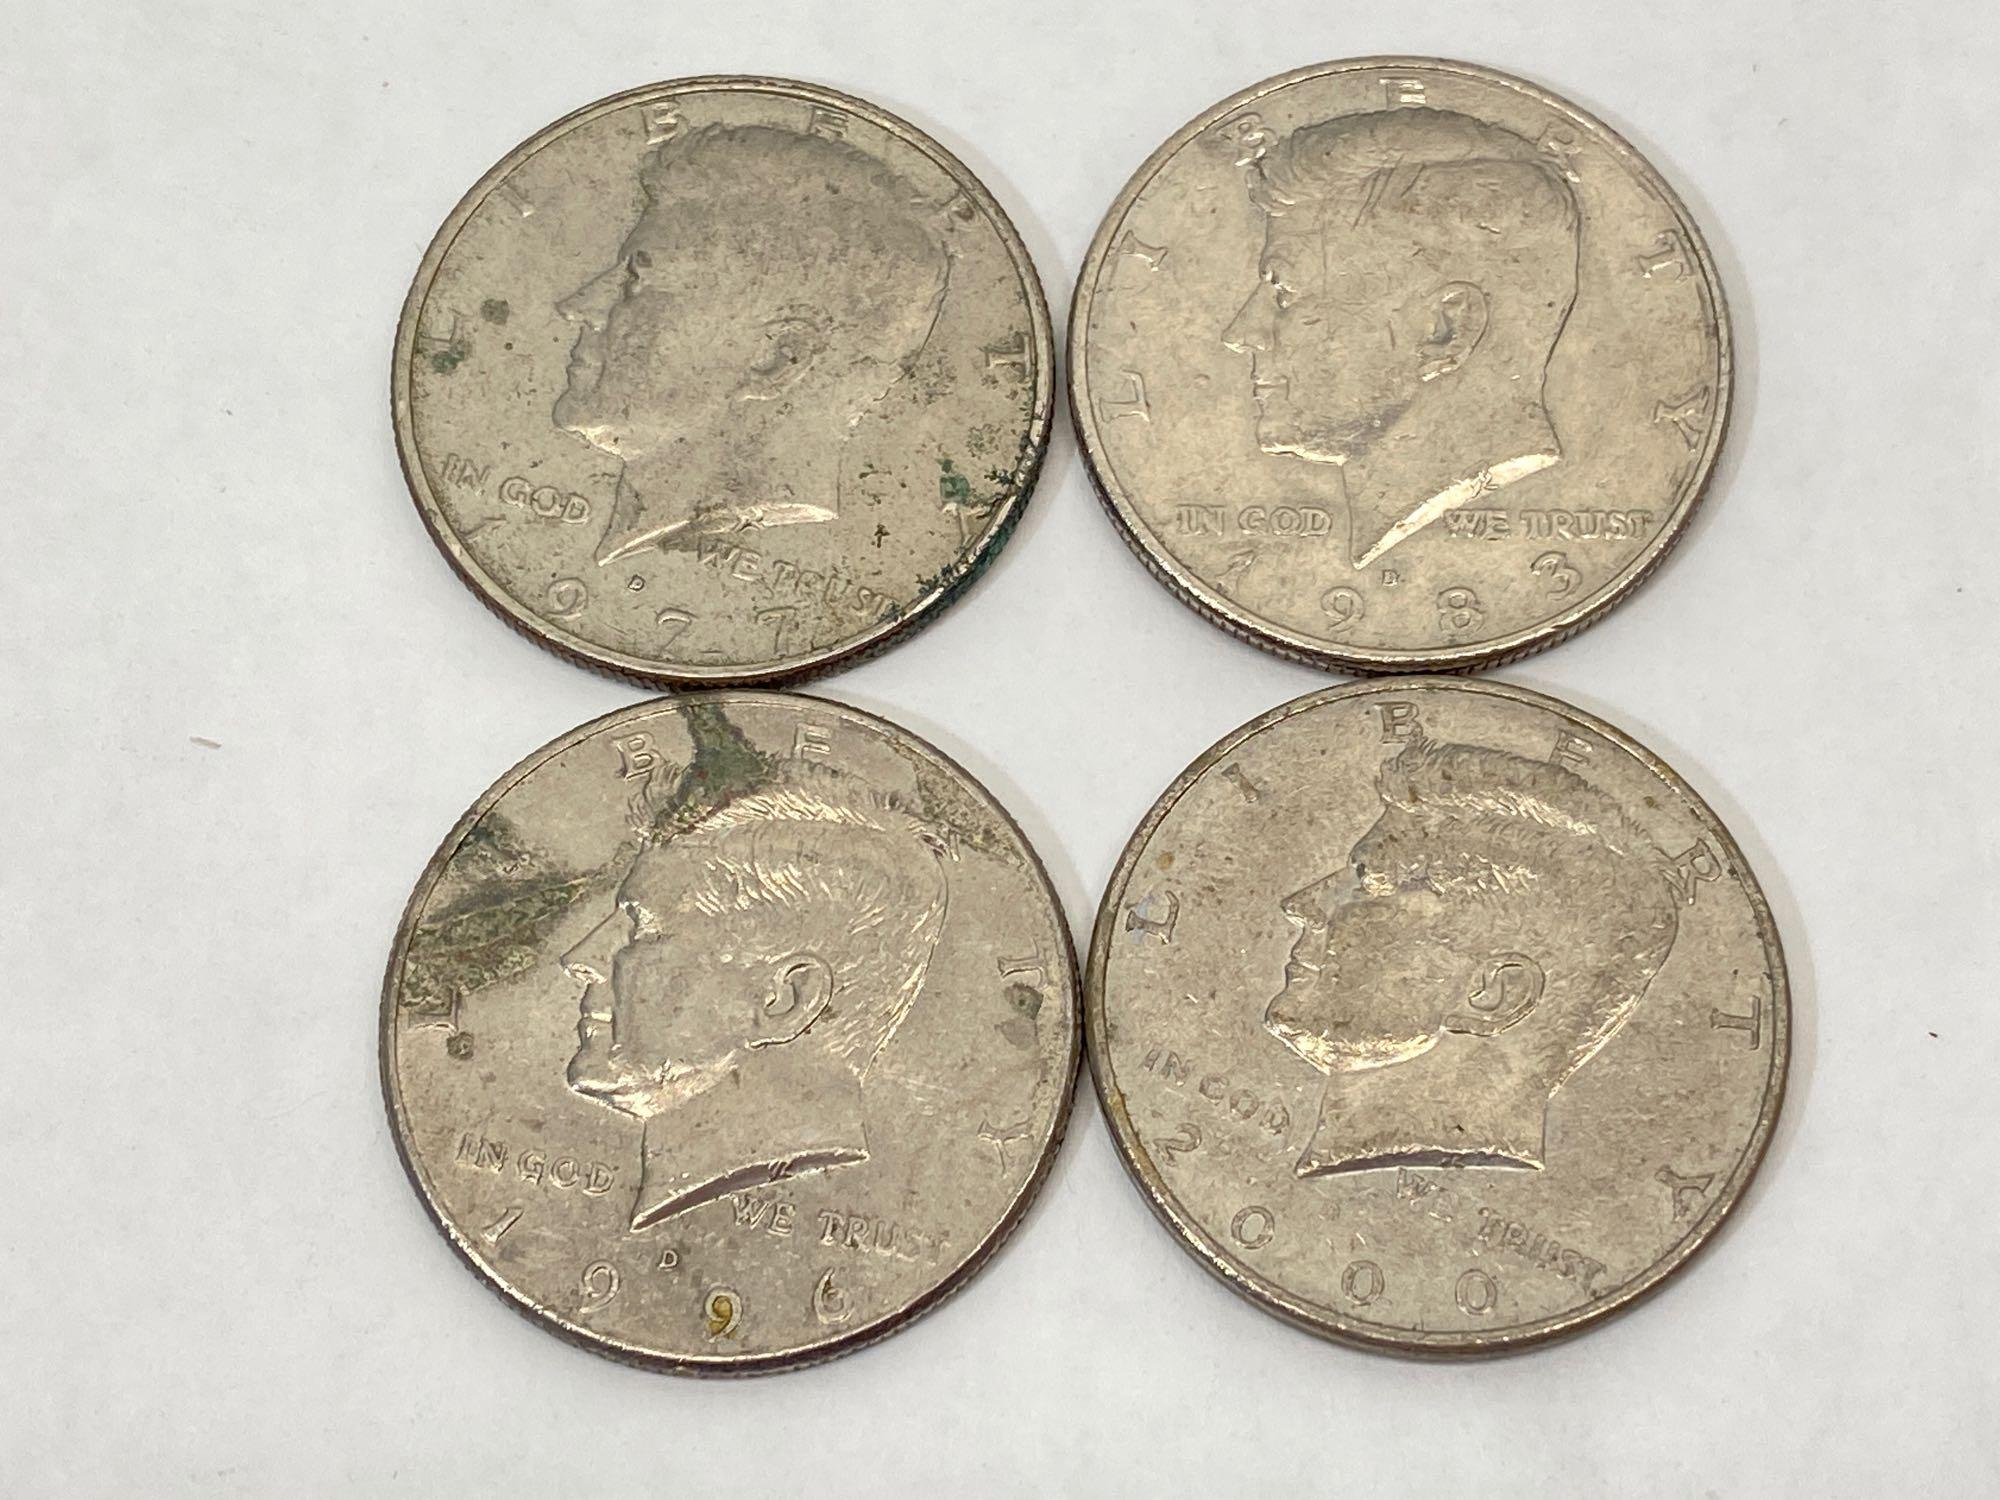 13 Kennedy half dollars U.S. half dollar coins, with 4 silver coins